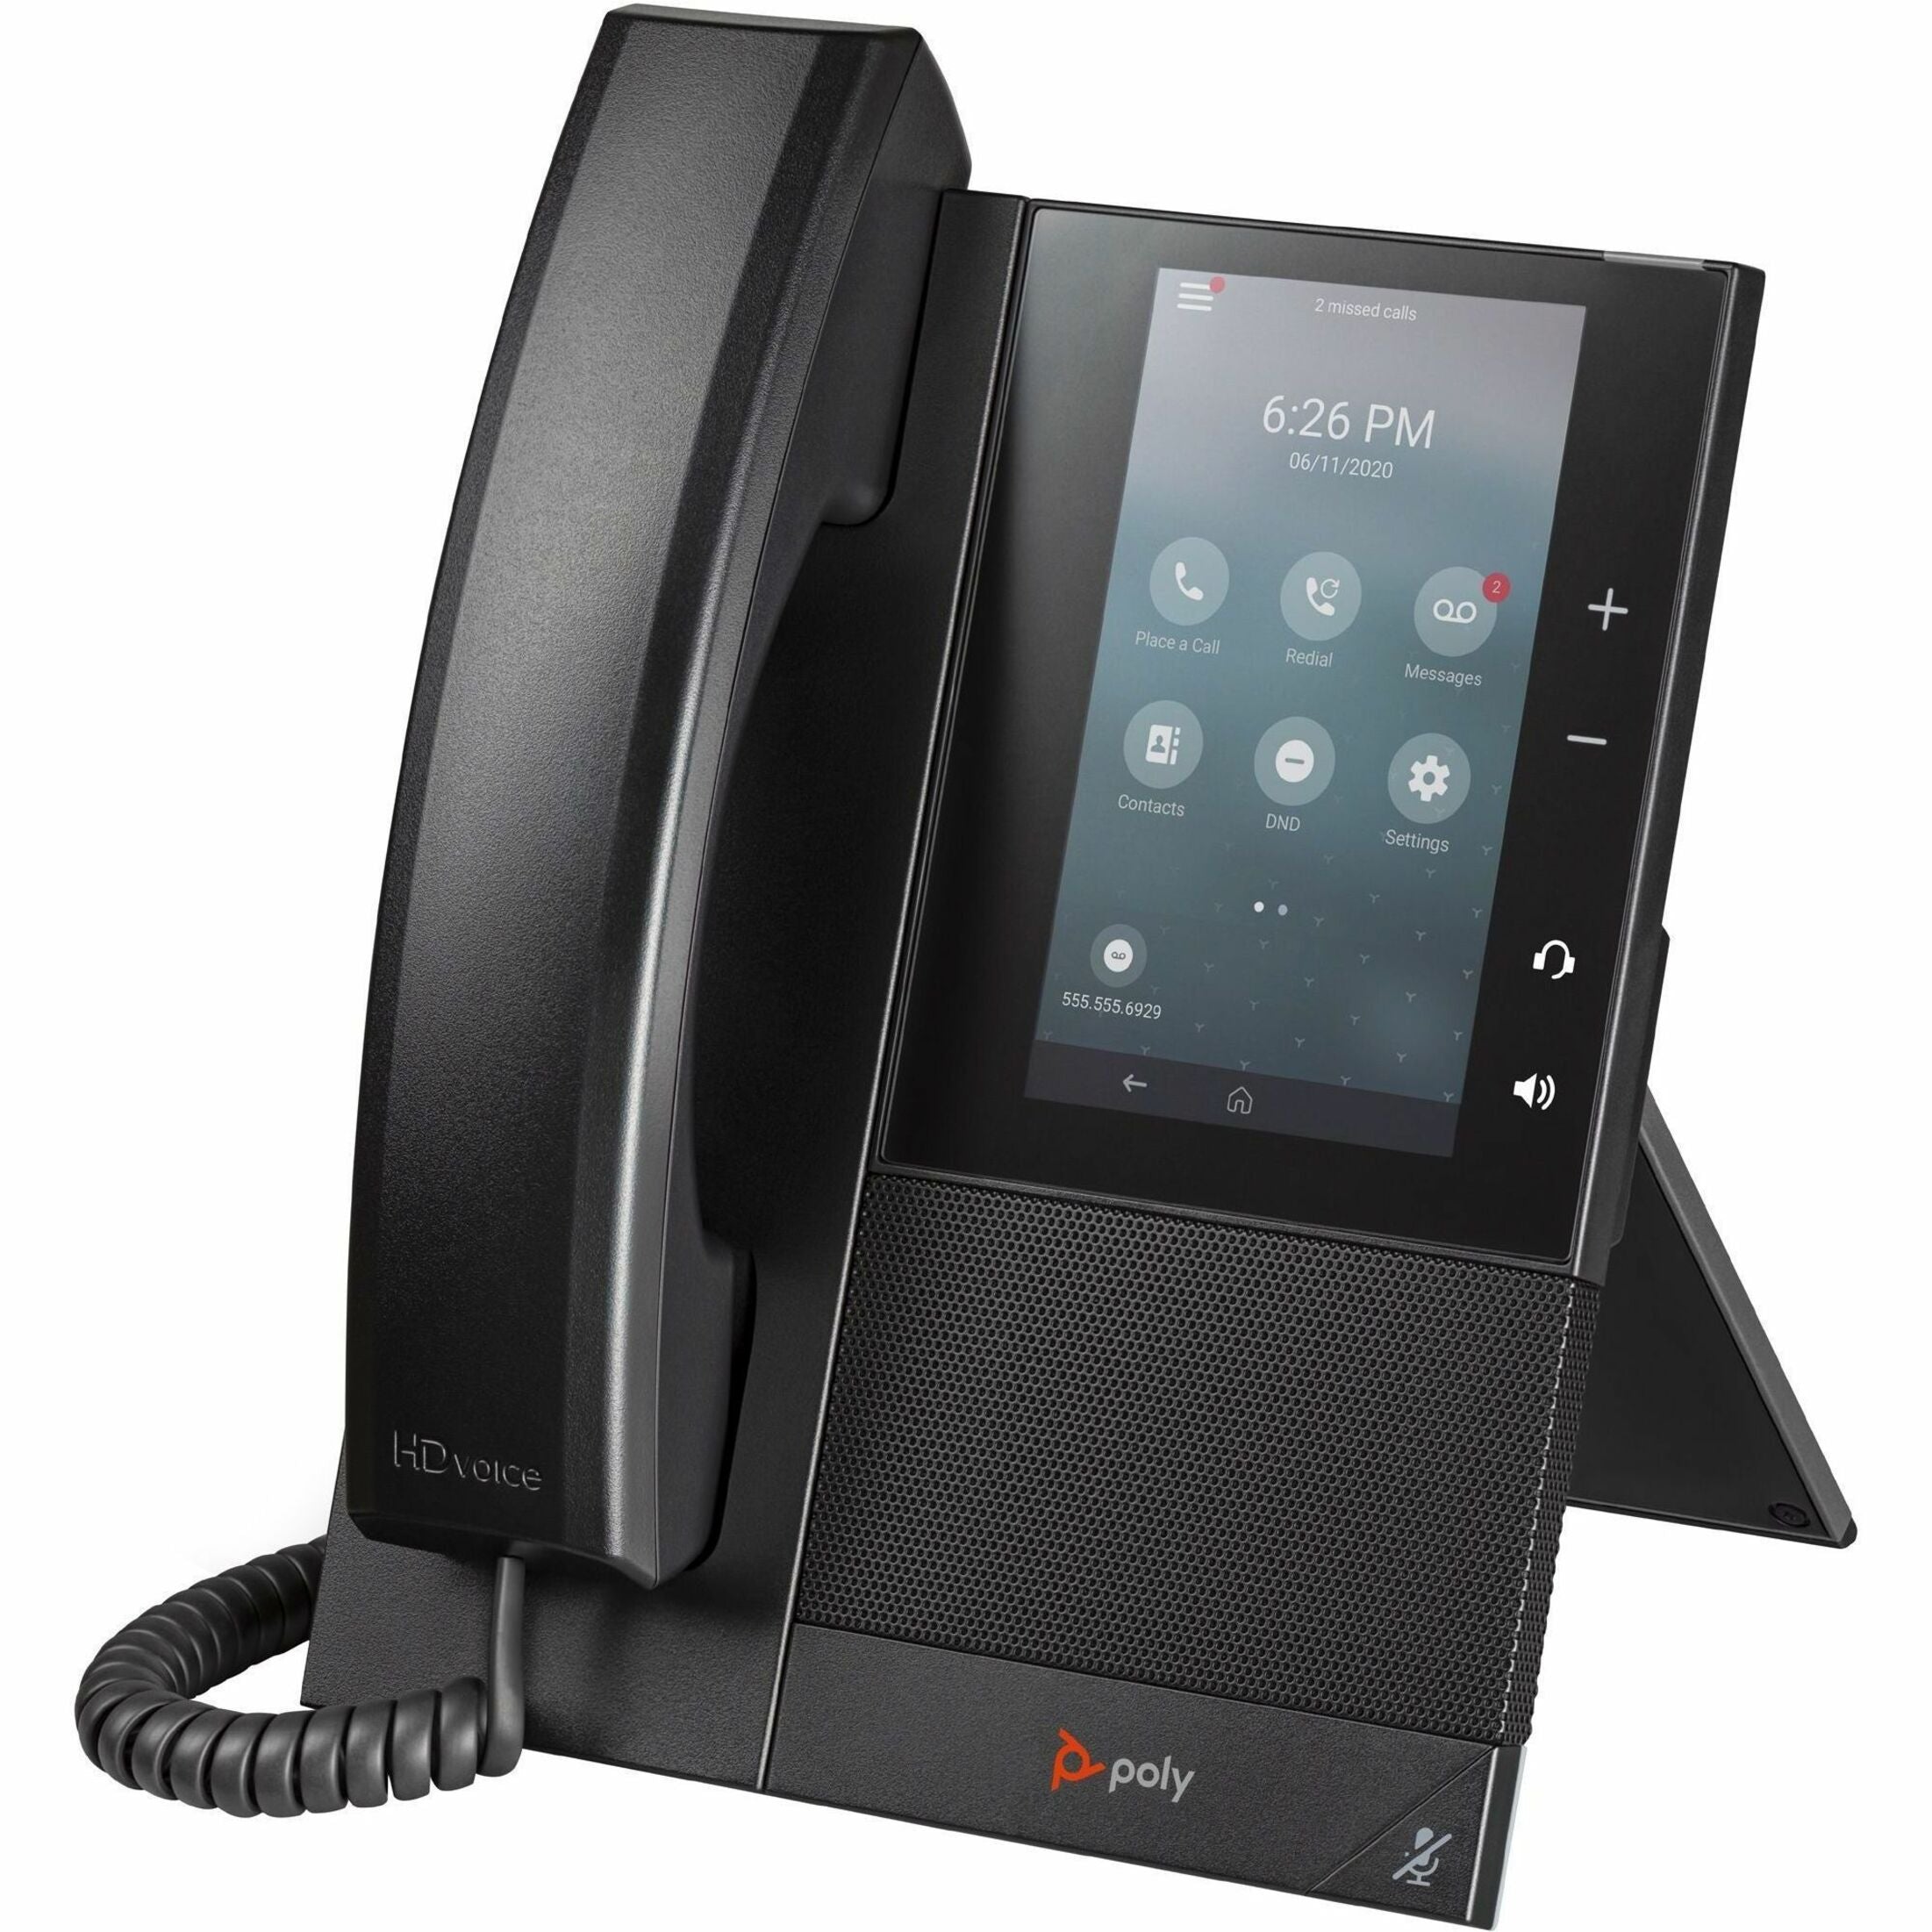 Poly 2200-49735-019 CCX 505 IP Phone, Speakerphone, Wi-Fi, Bluetooth, Energy Star, 1 Year Warranty